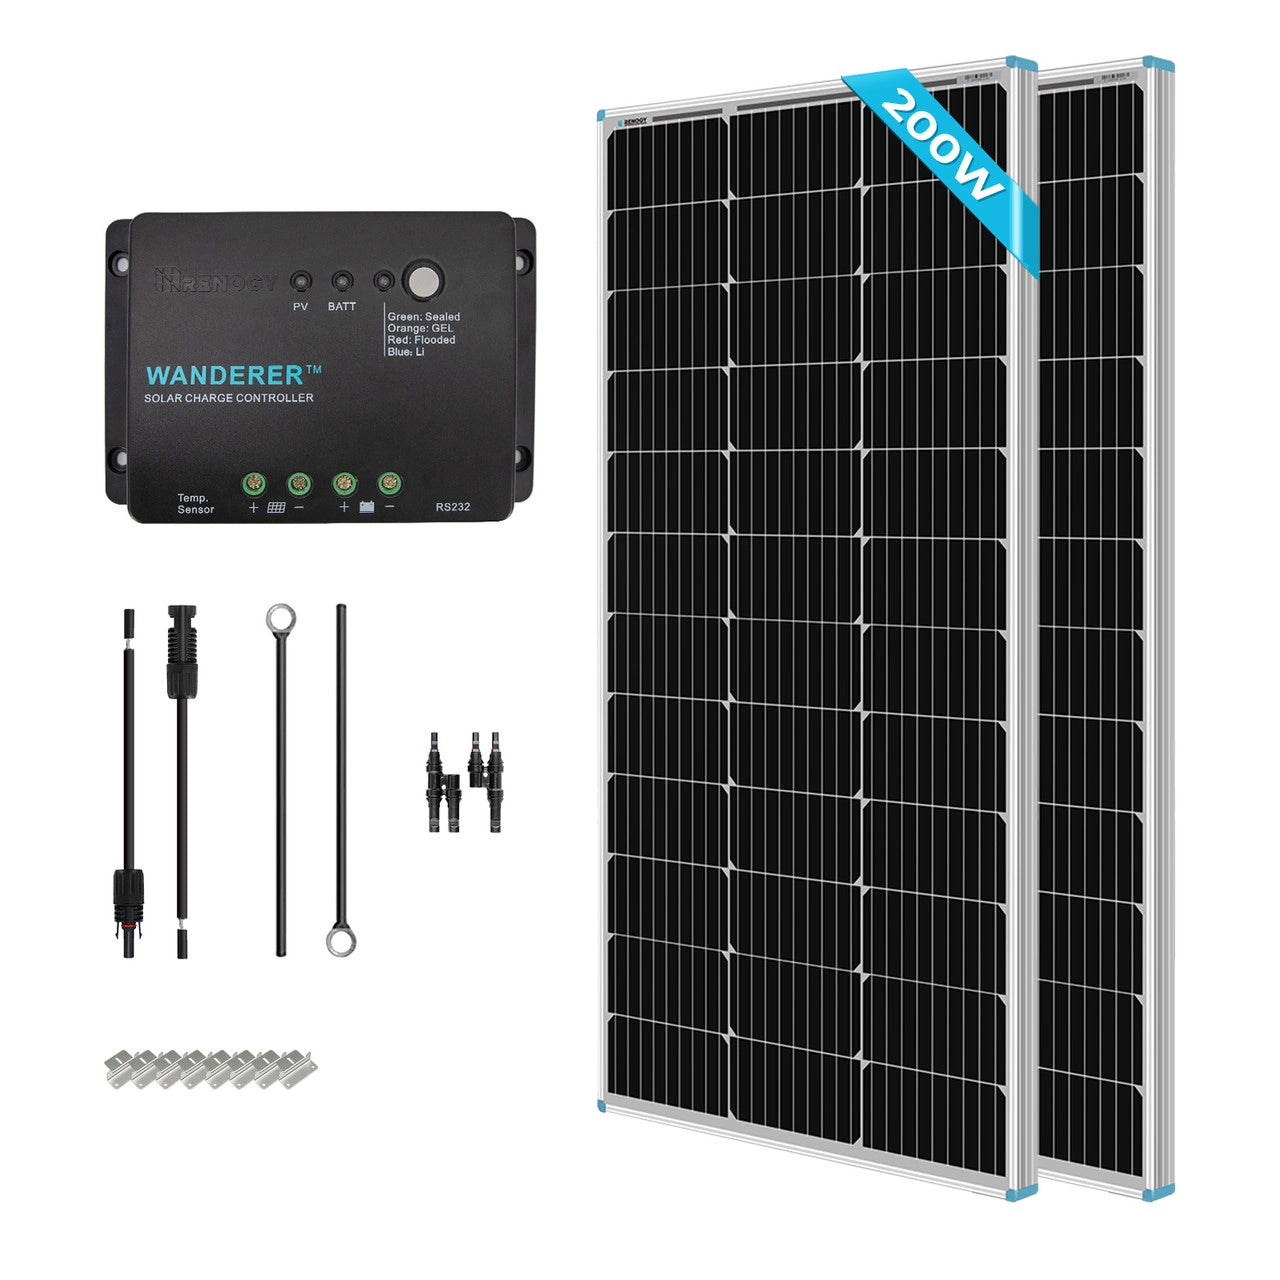 200 Watt 12 Volt Monocrystalline Solar Starter Kit